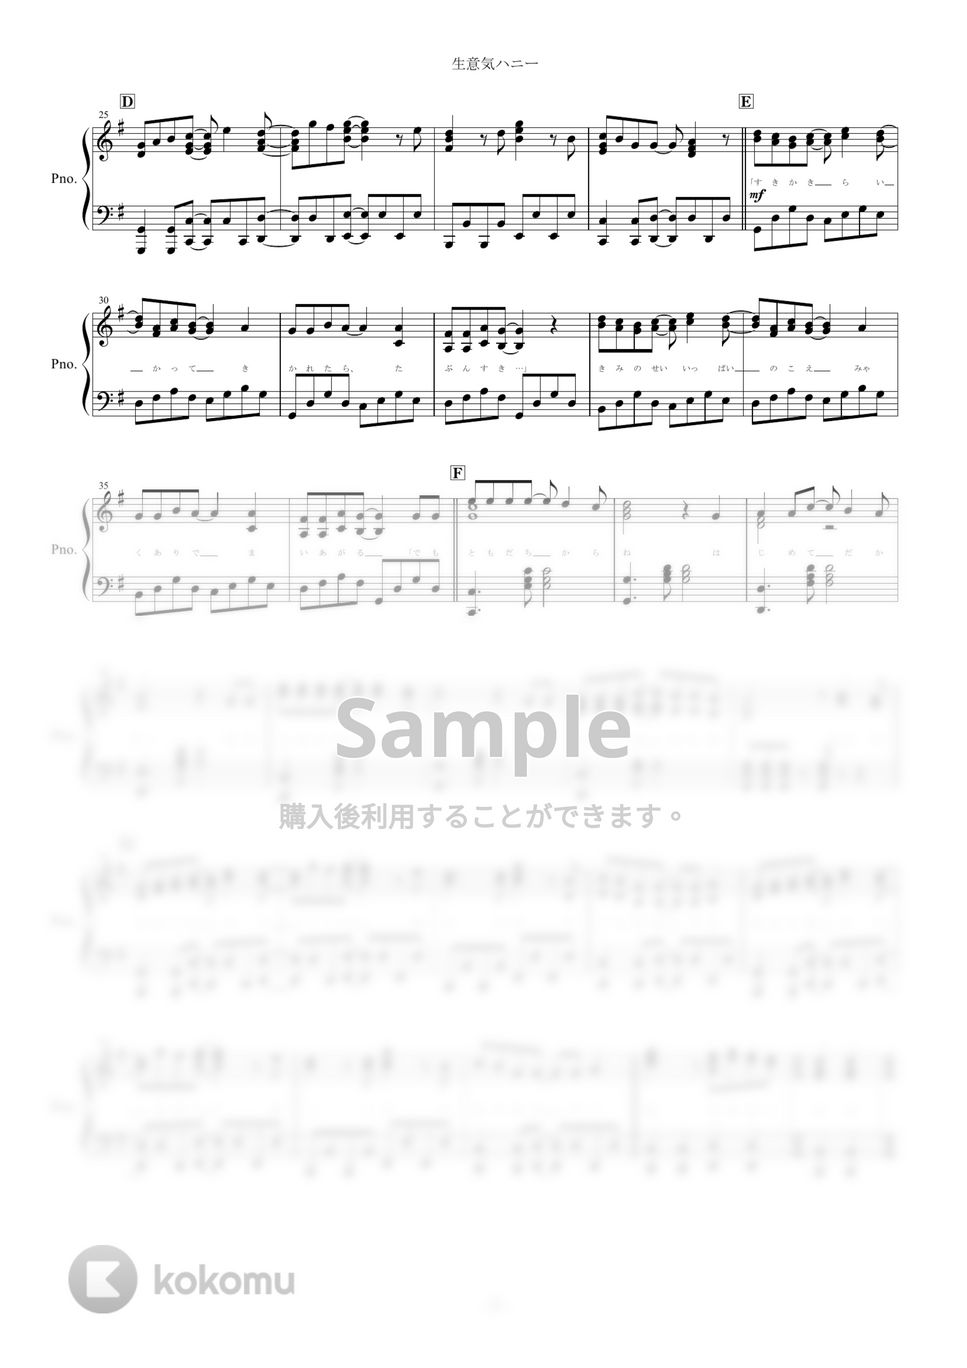 HoneyWorks - 生意気ハニー (ピアノ楽譜/全６ページ) by yoshi